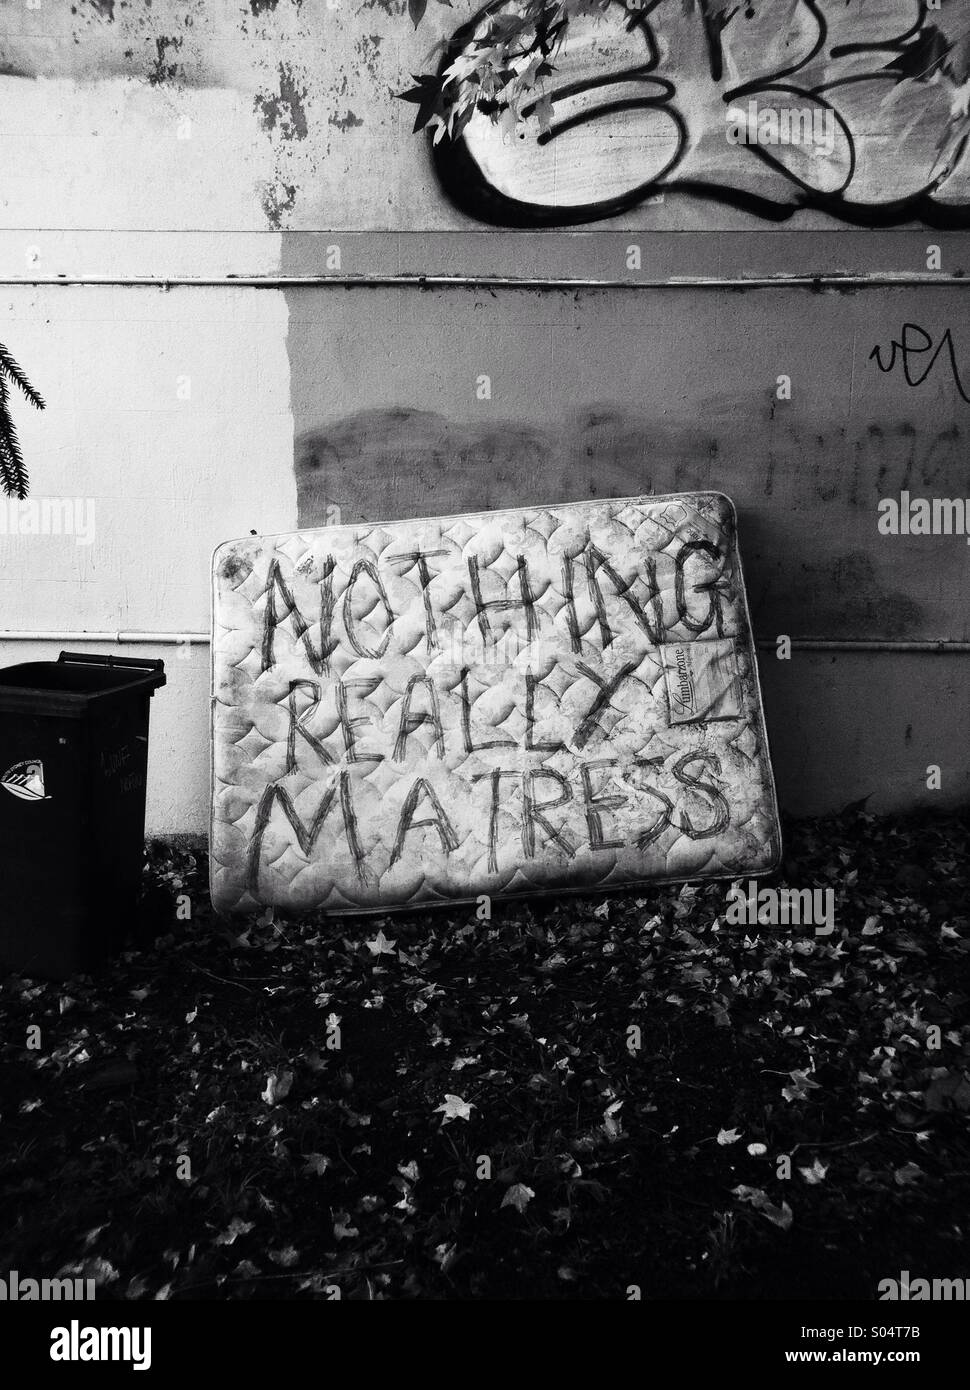 Apathetic mattress Stock Photo